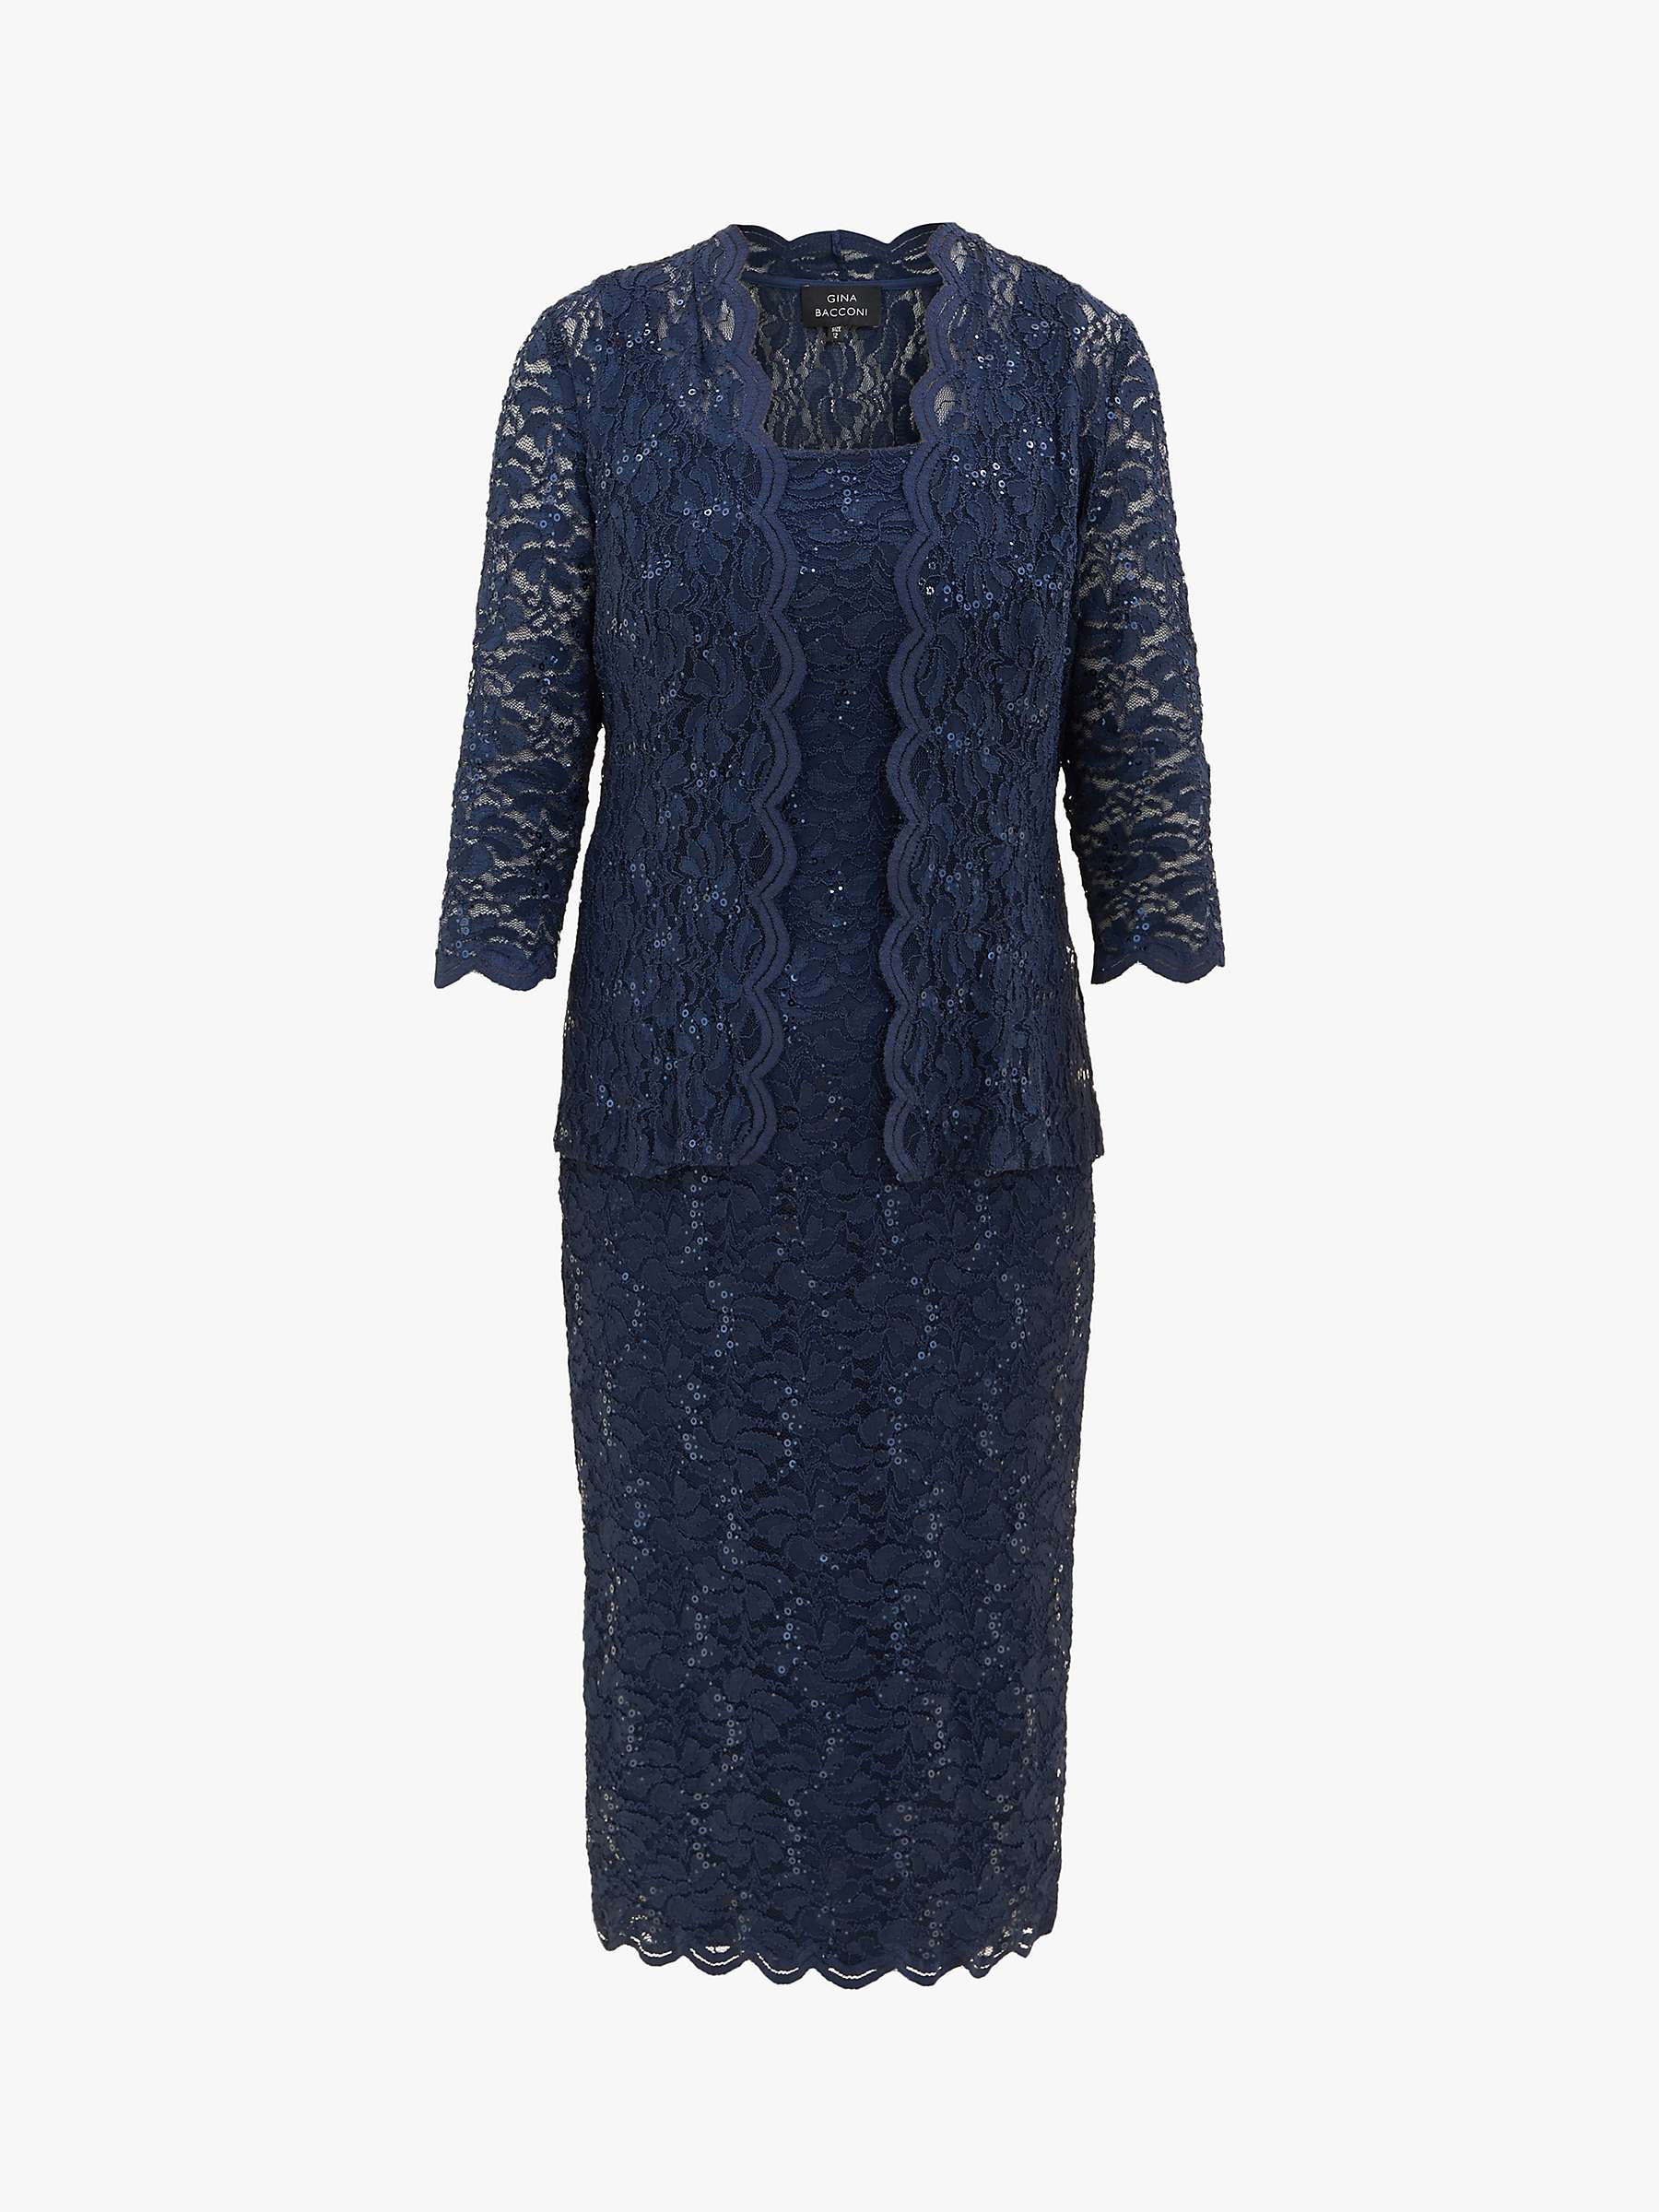 Buy Gina Bacconi Kayla Lace Midi Dress and Jacket, Navy Online at johnlewis.com